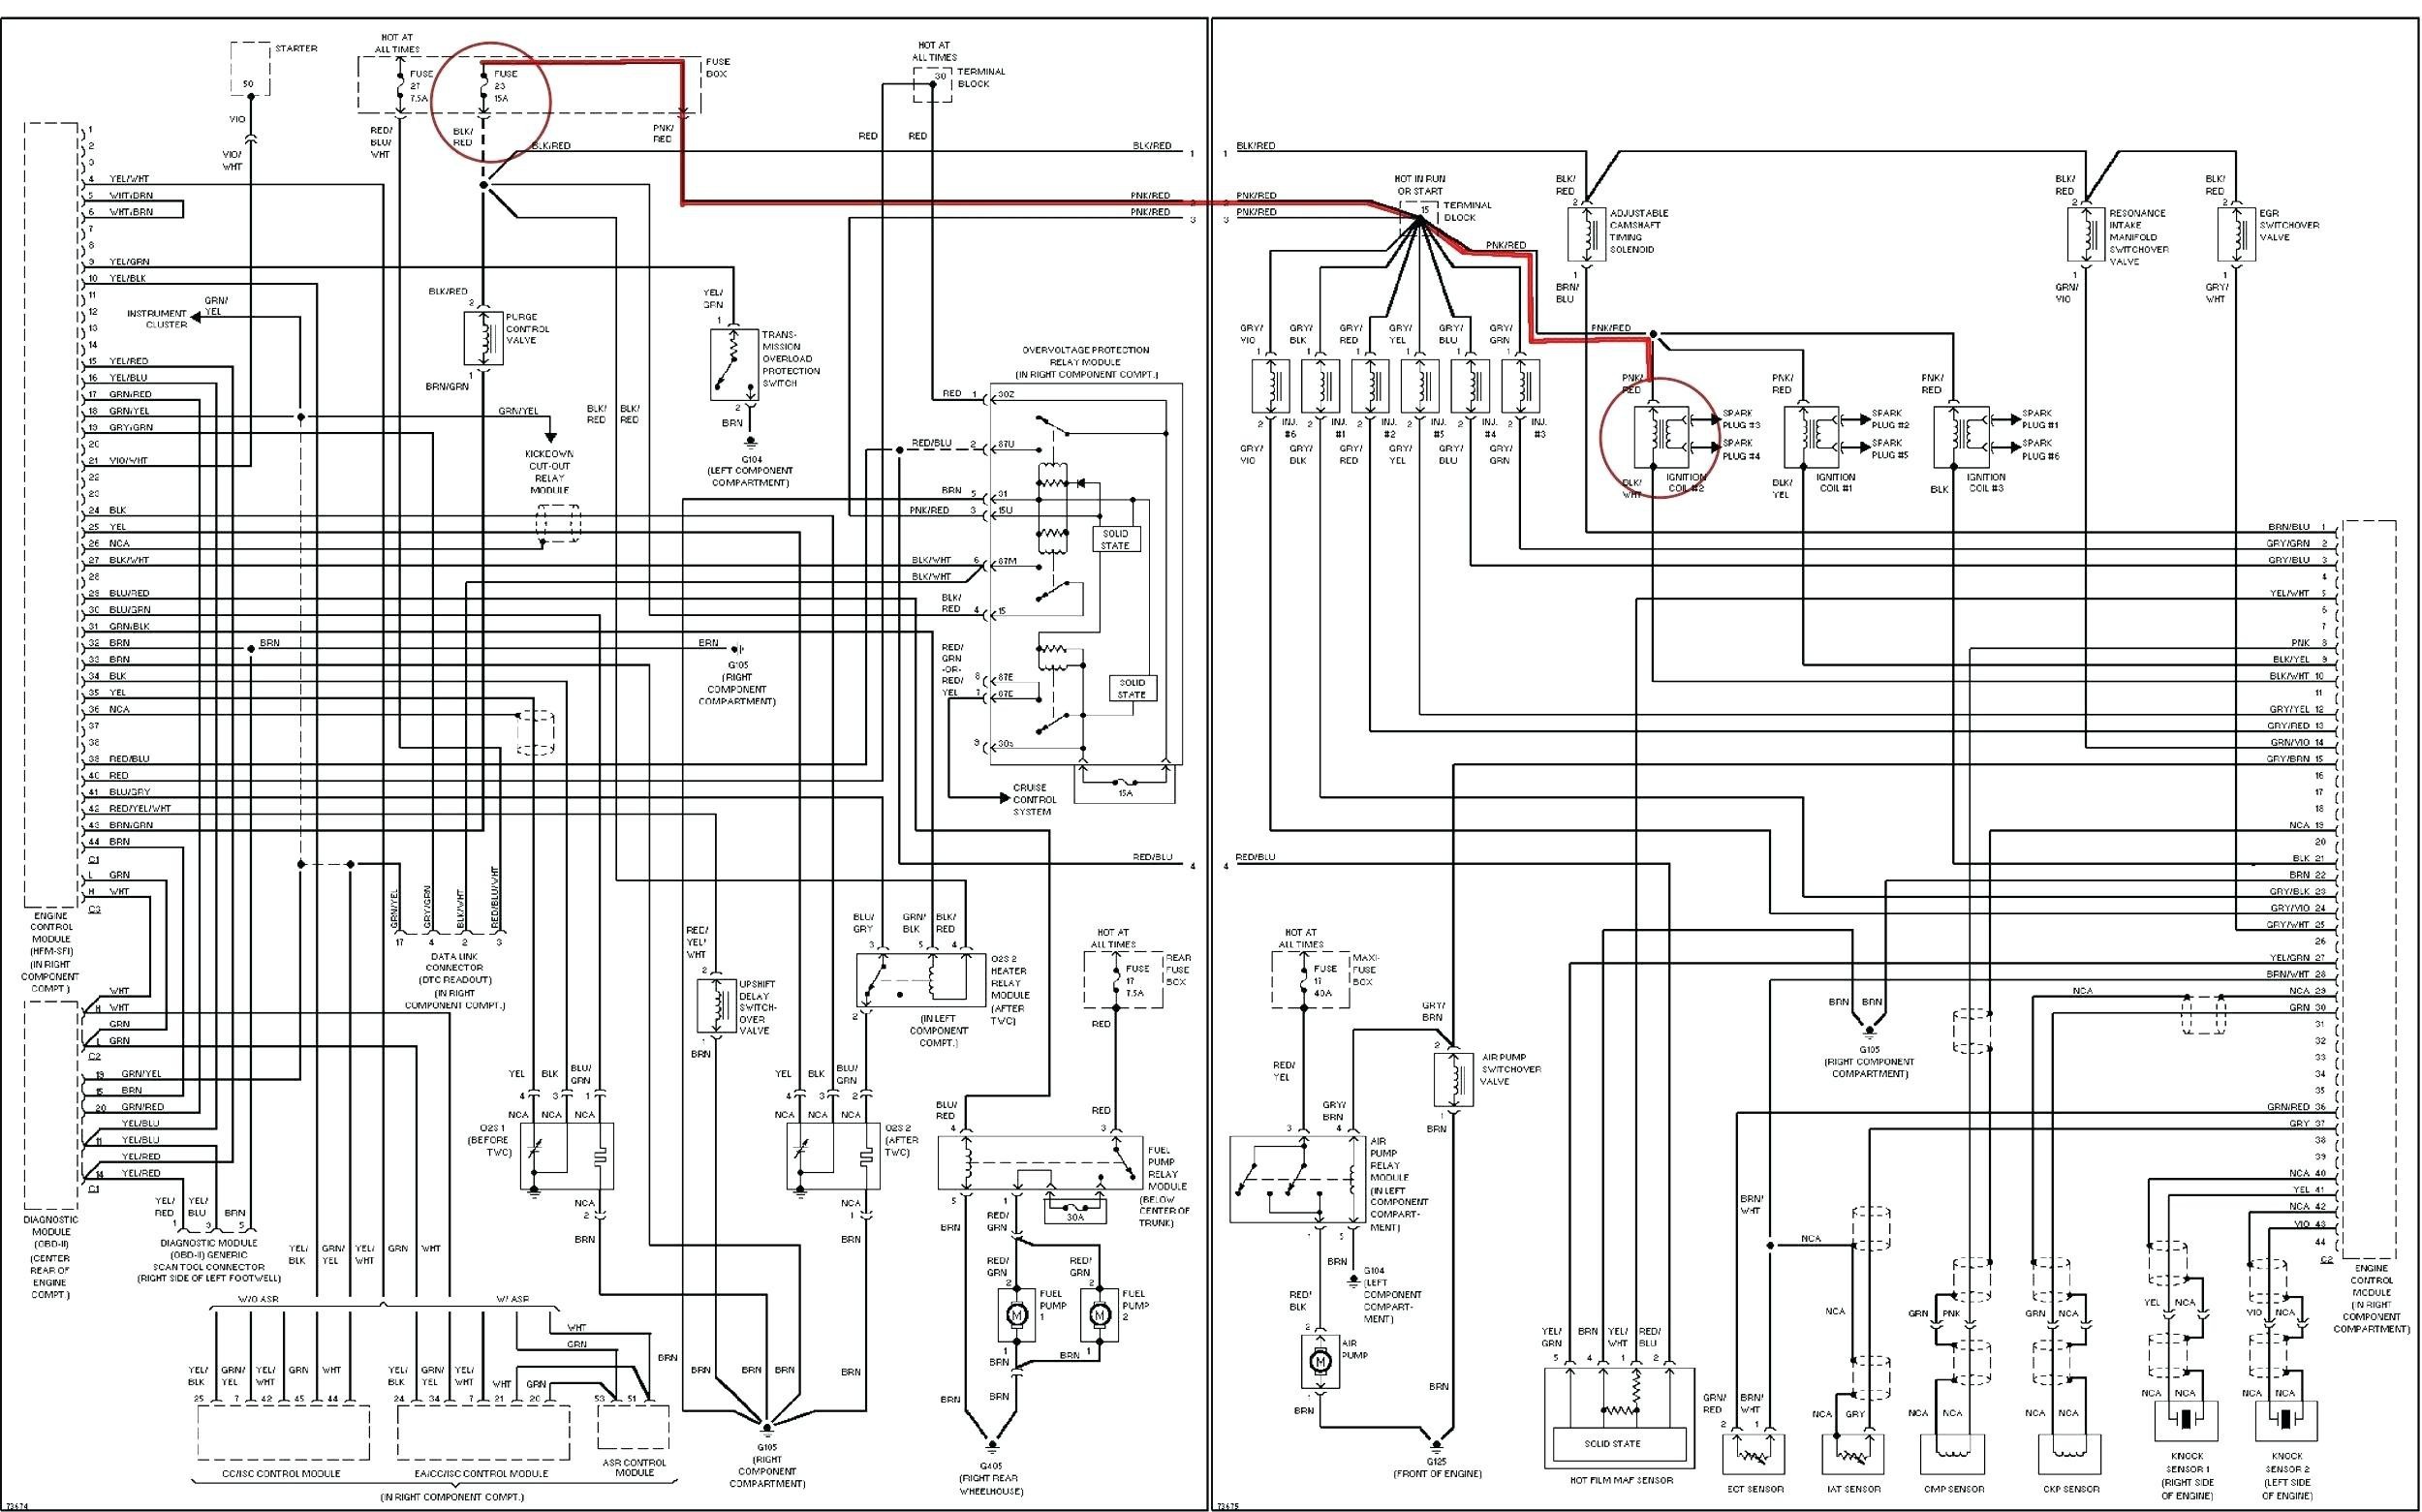 Mercedes Benz Wiring Diagram Mercedes Benz Wiring Diagram Altermator Data Wiring Diagrams • Of Mercedes Benz Wiring Diagram